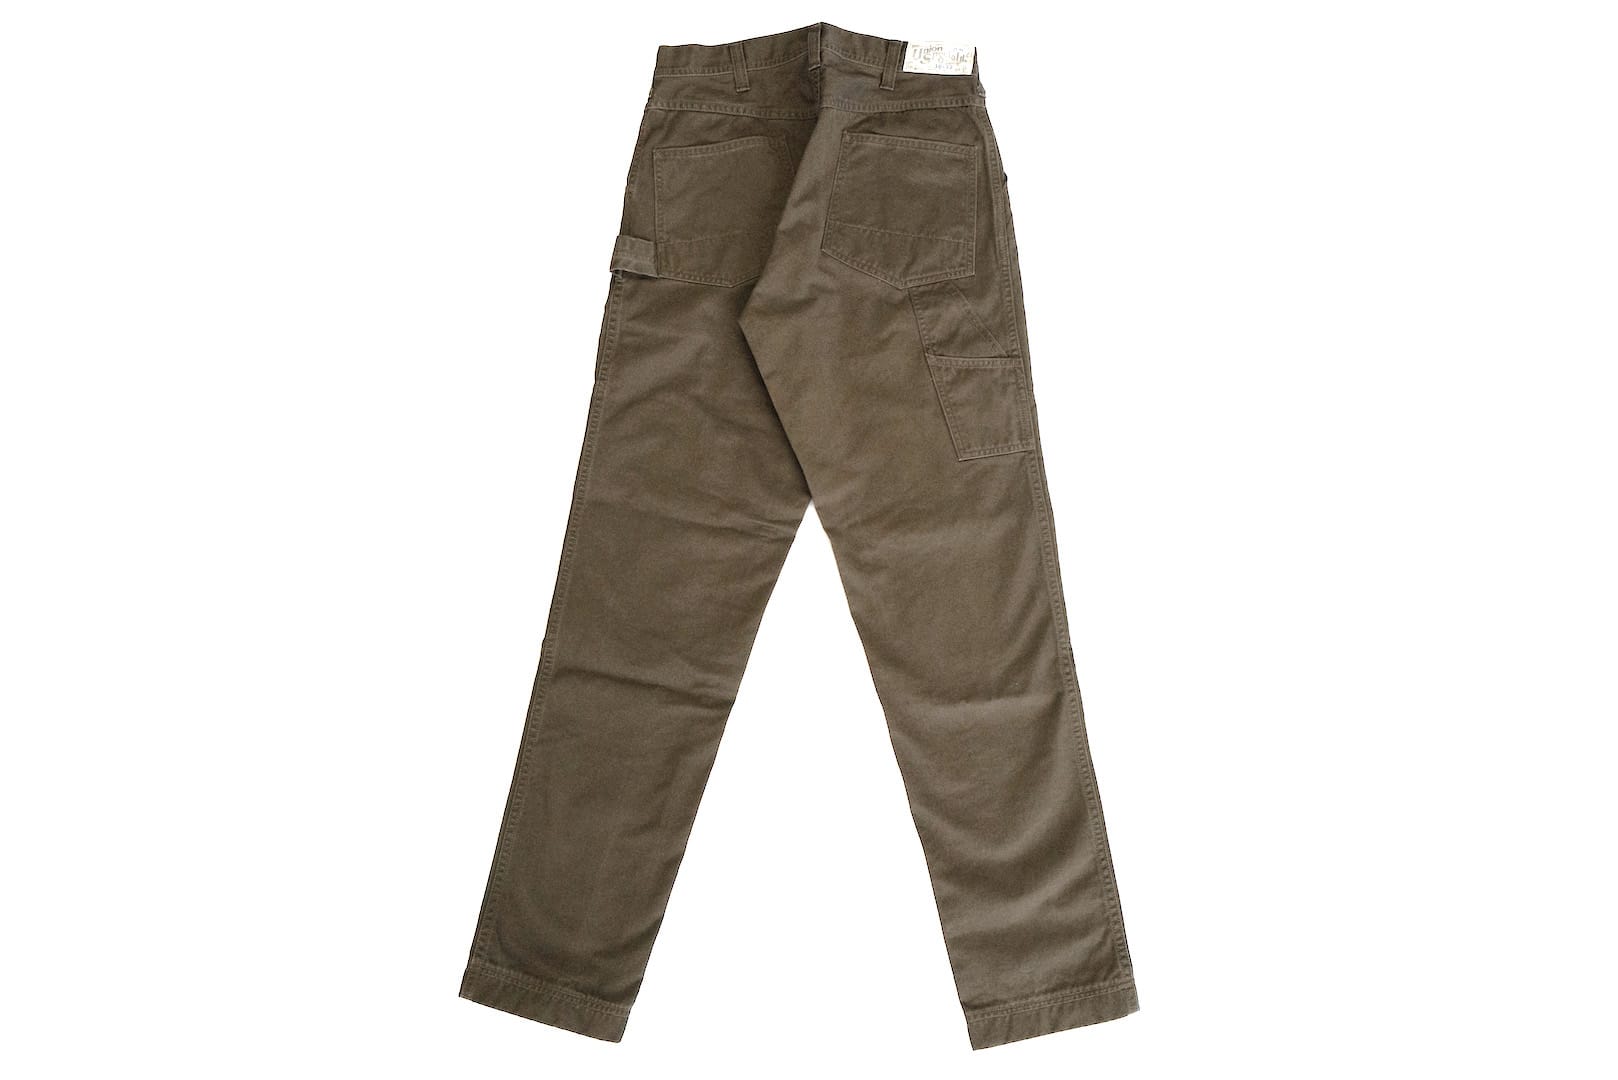 Freewheelers "Grease Monkey" Overall Trousers (Dark Brown)